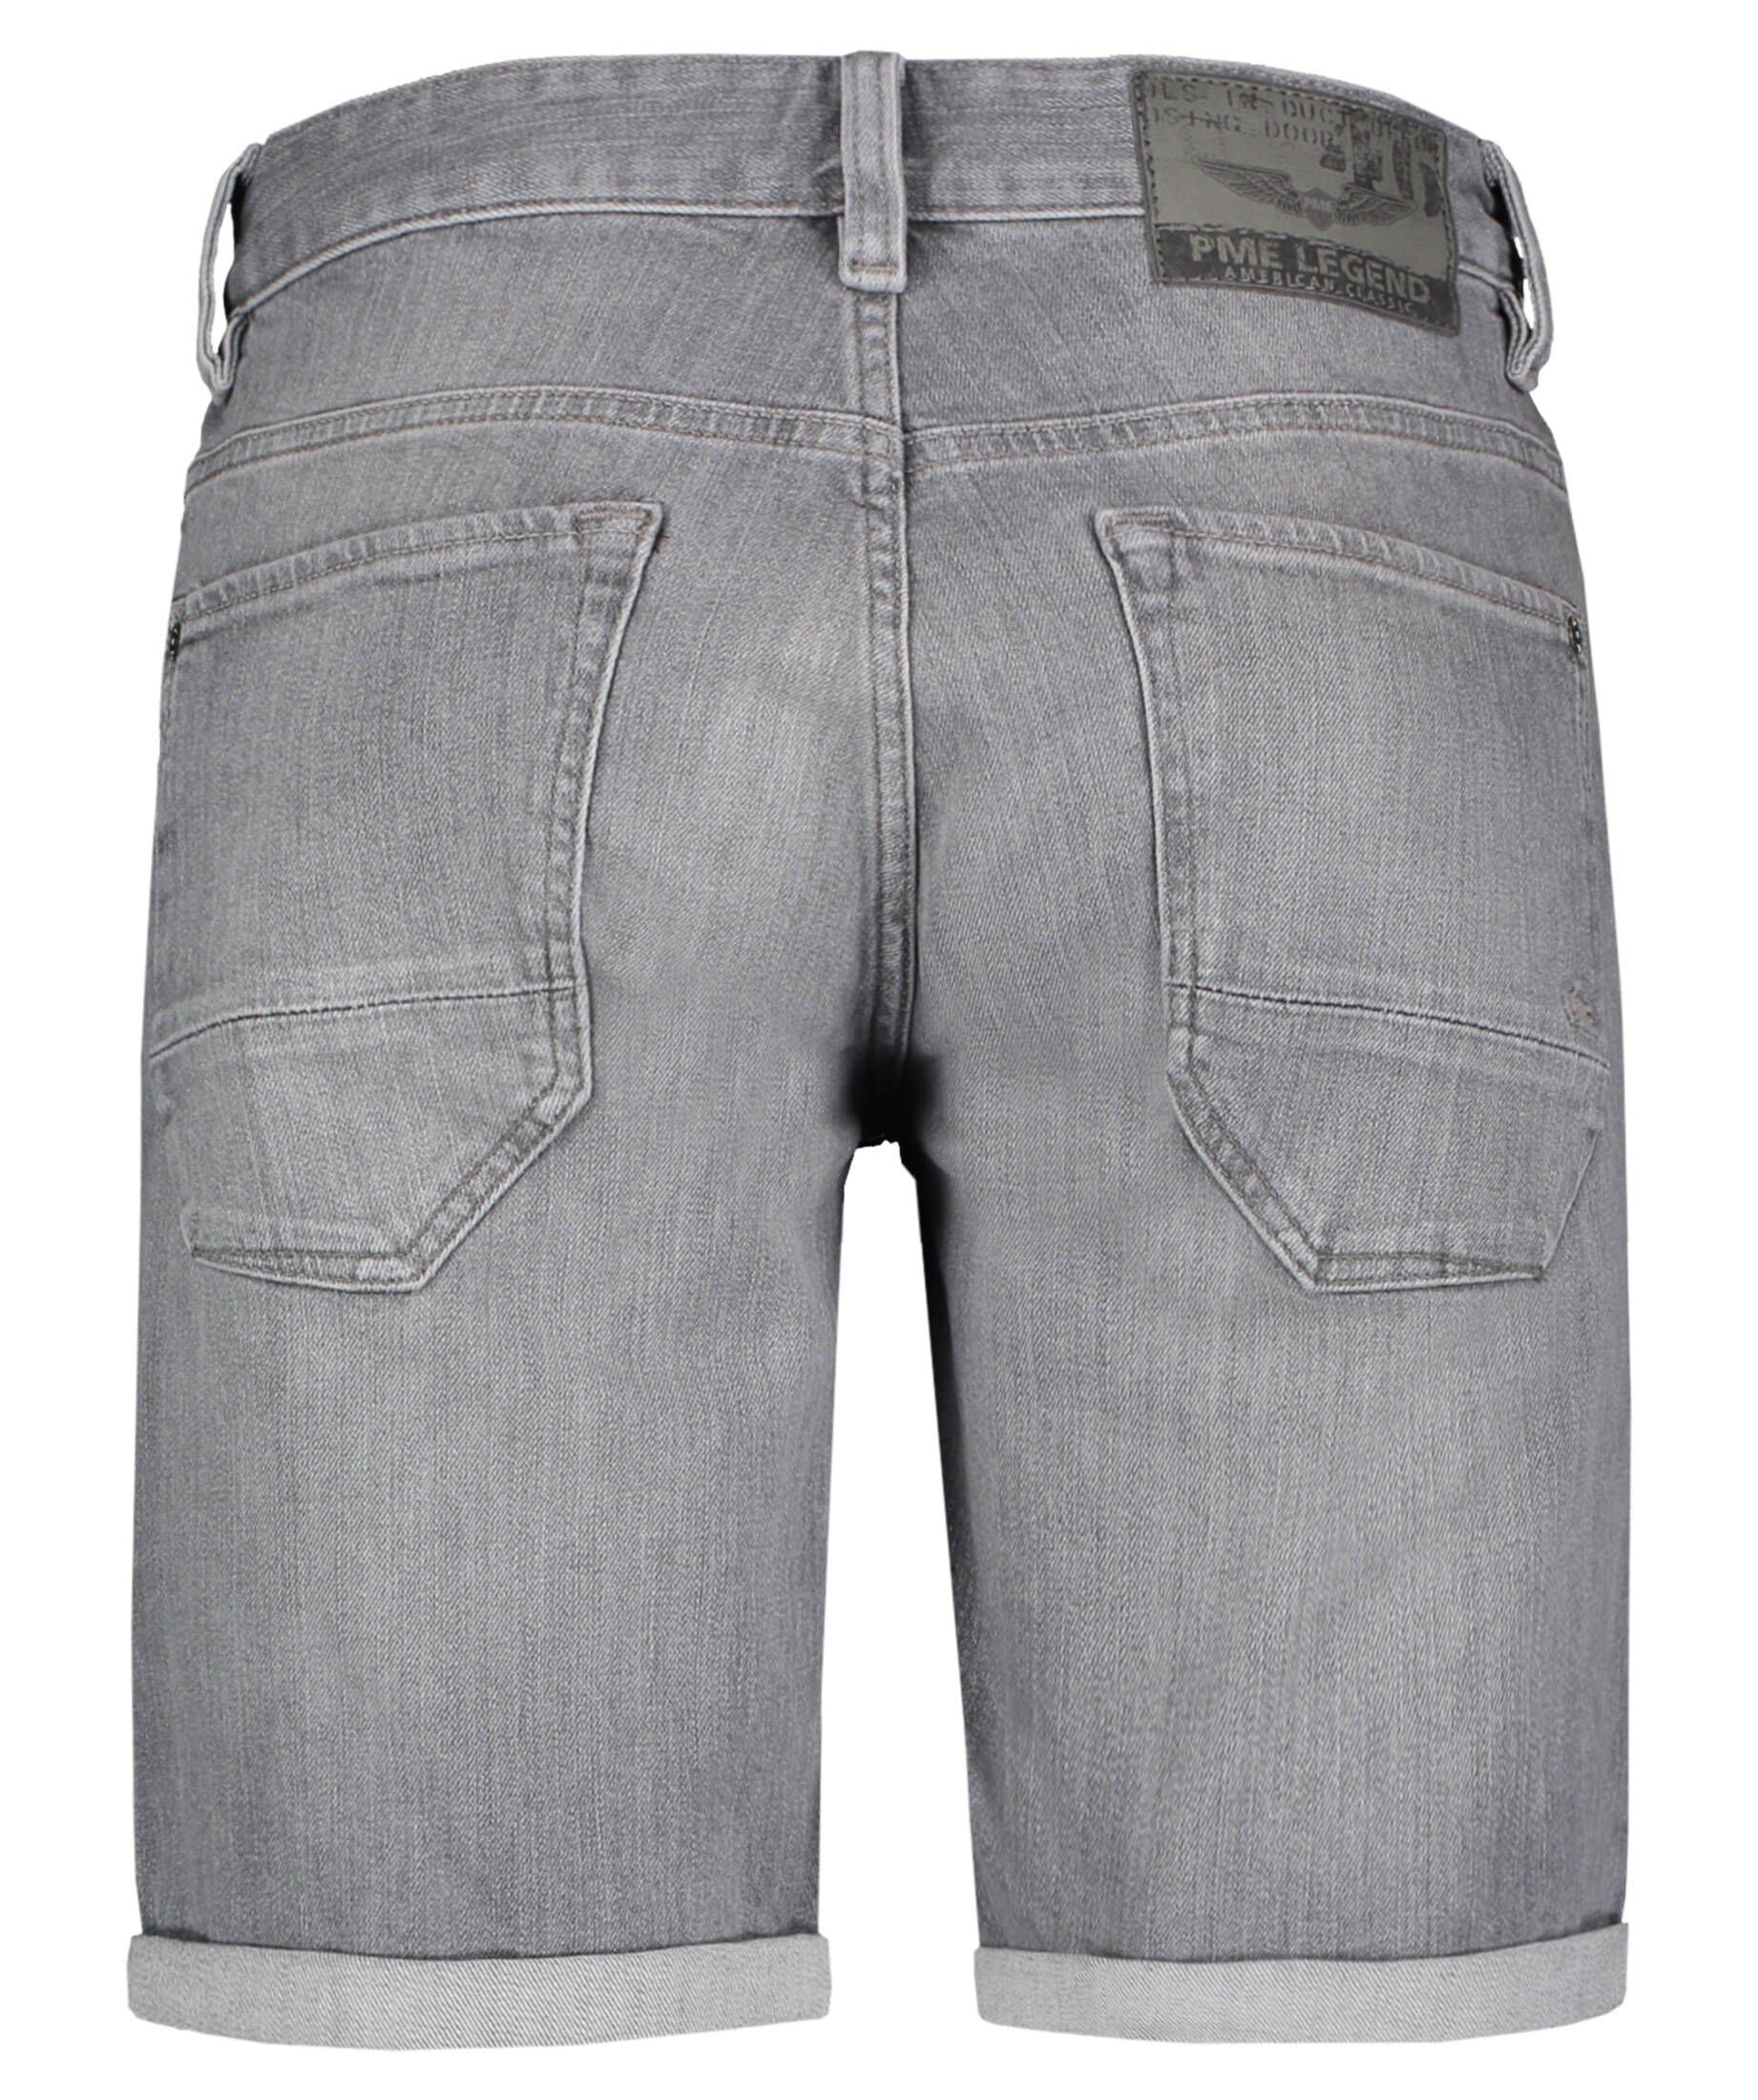 Regular Fit PME Herren LEGEND NIGHTFLIGHT (12) silber Jeansshorts Jeanshorts